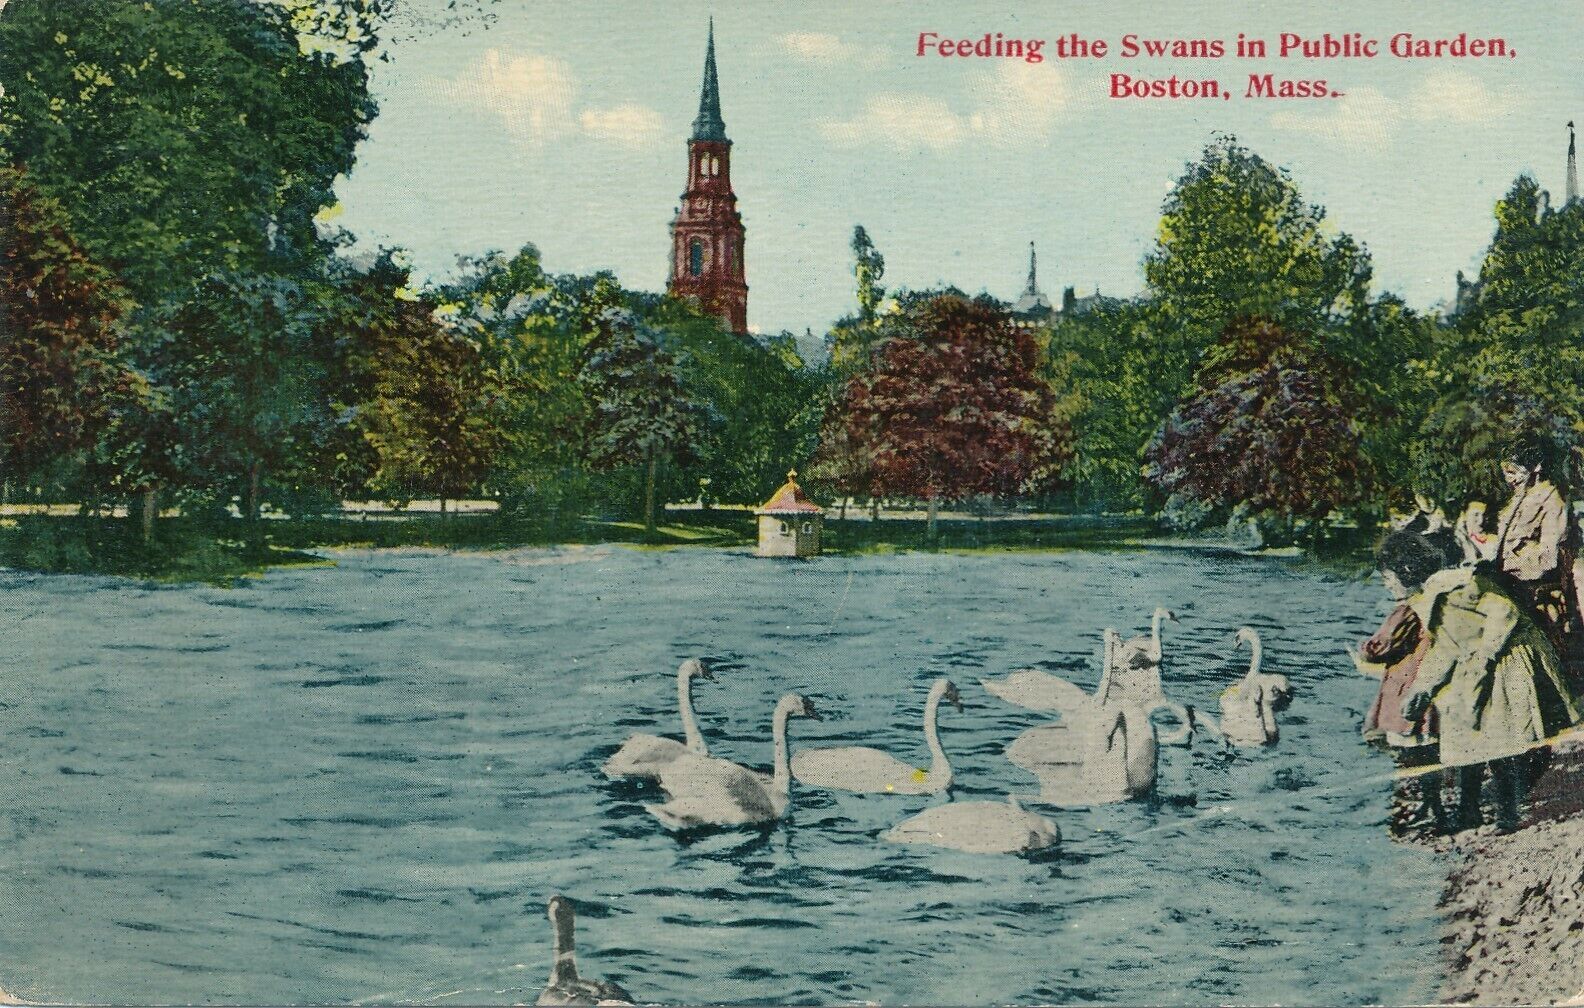 BOSTON MA – Feeding the Swans in Public Garden